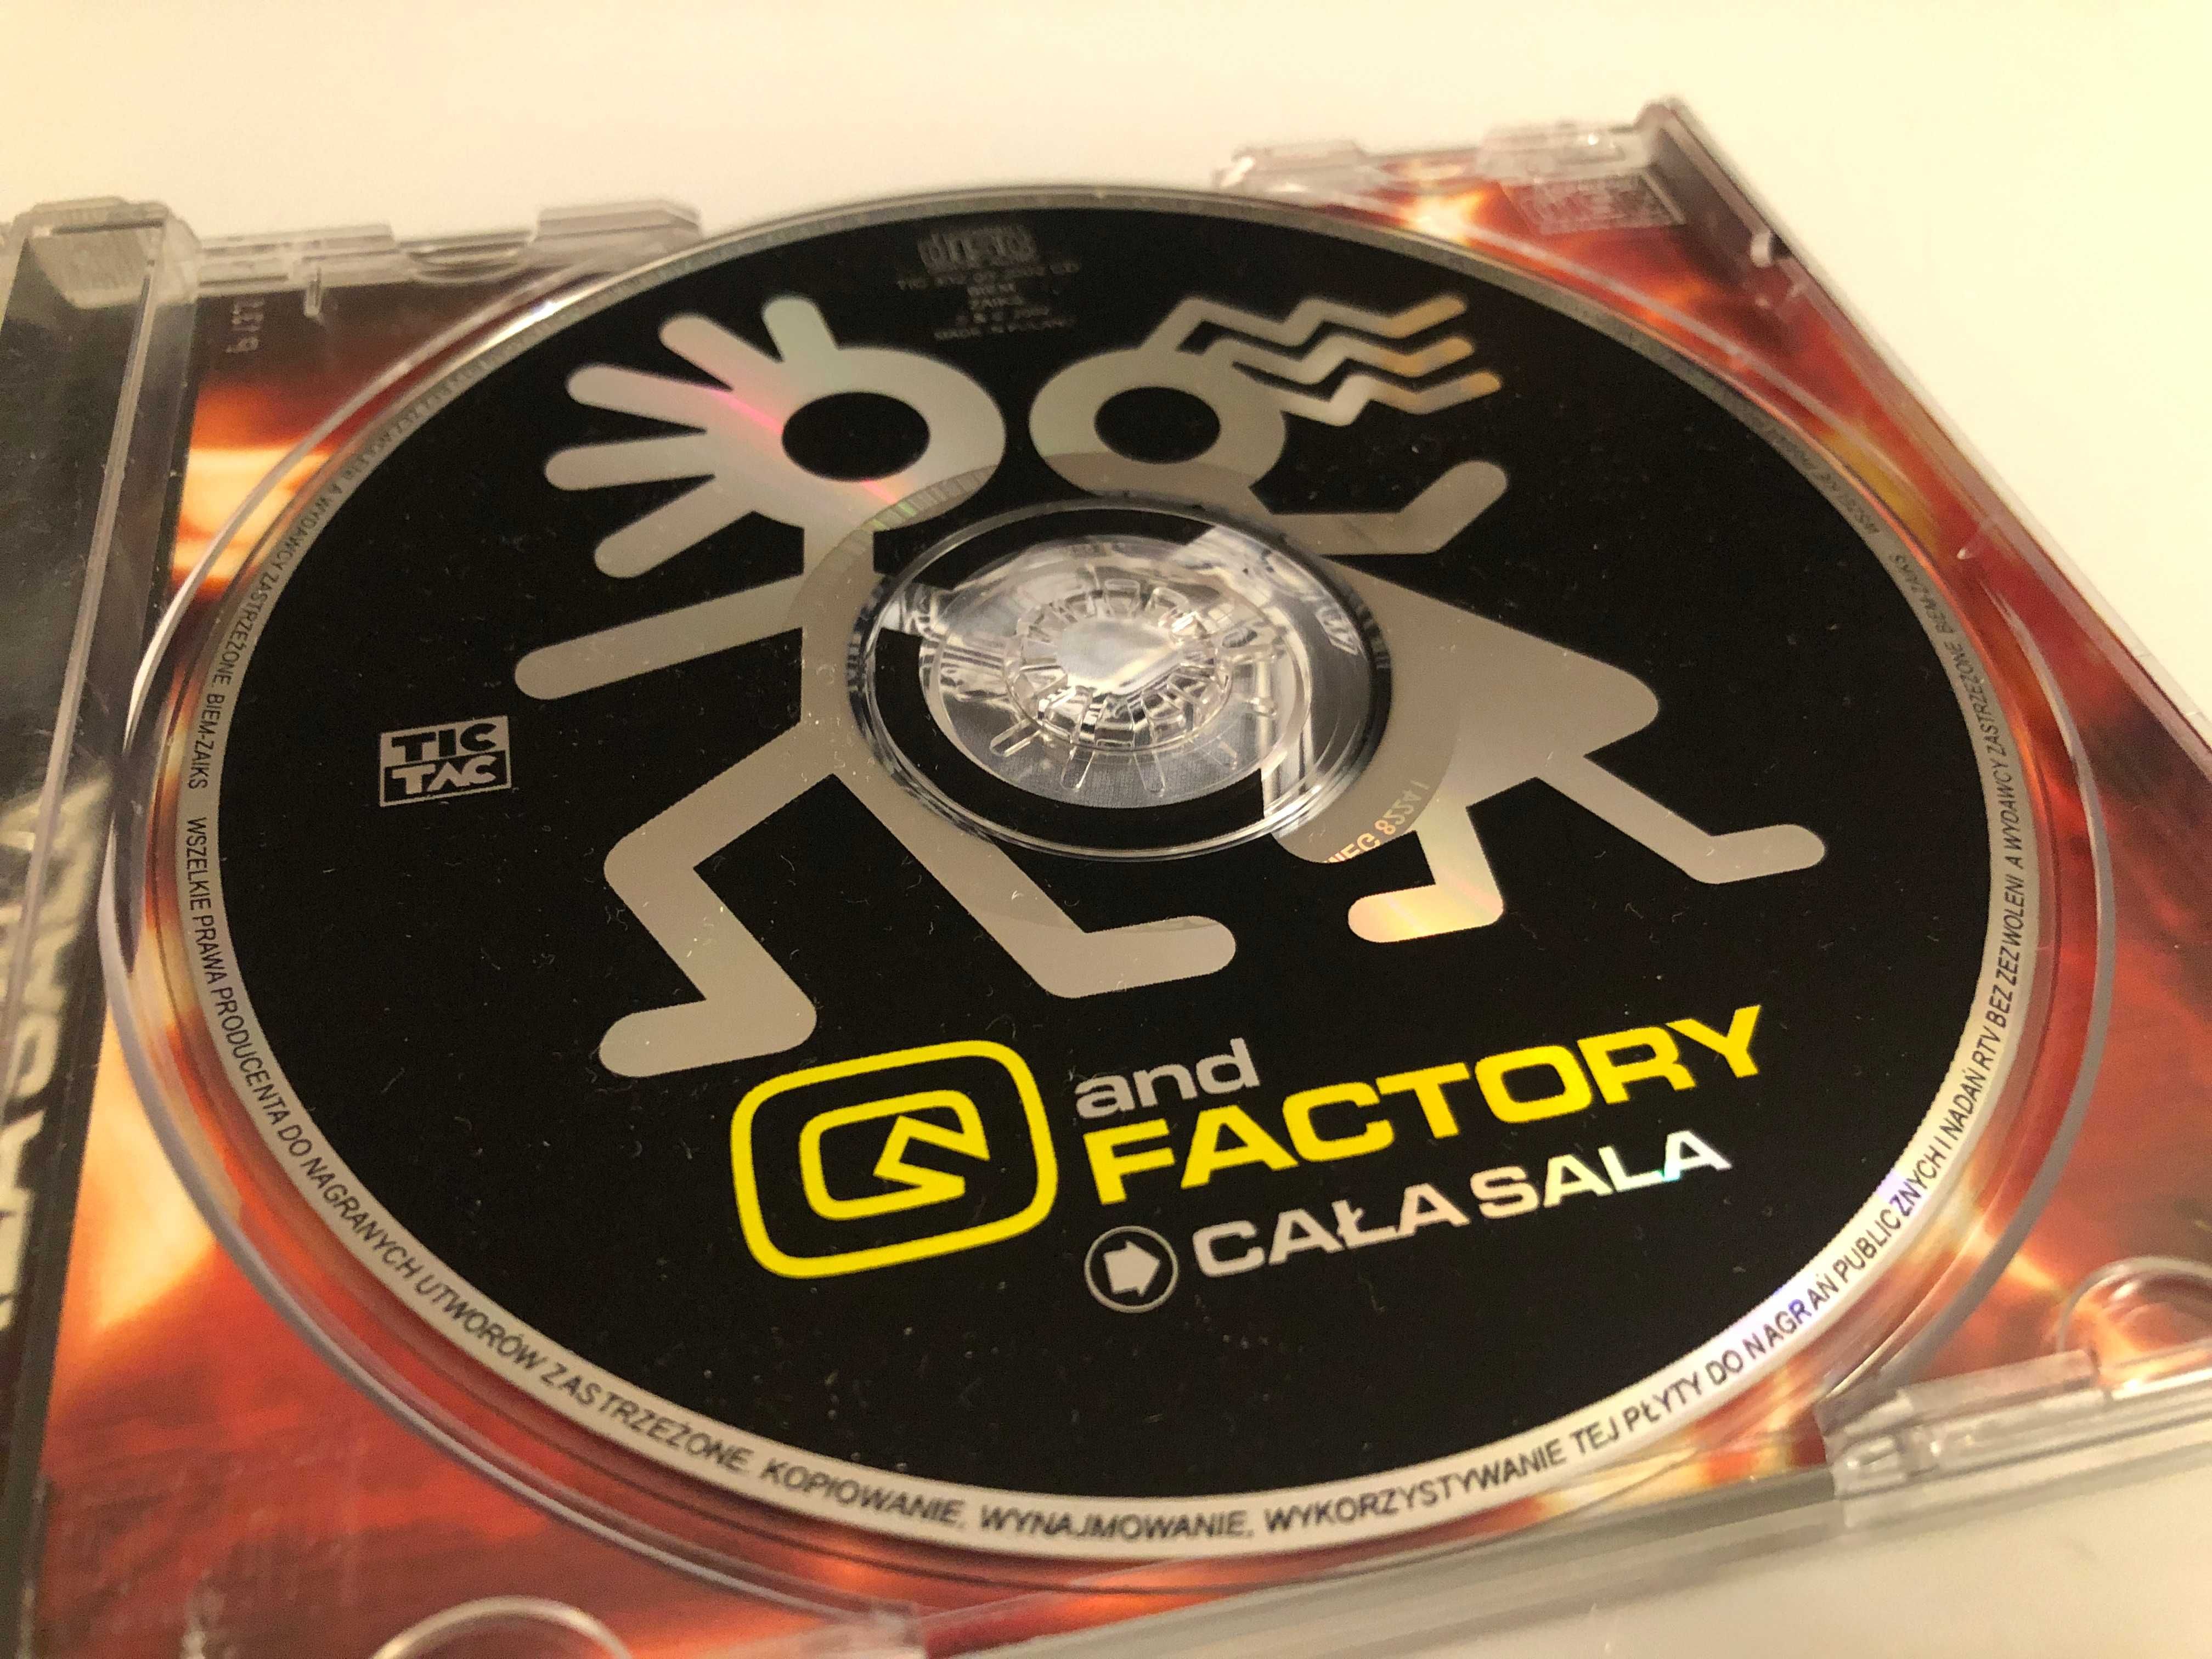 Q And Factory Cała sala | płyta CD